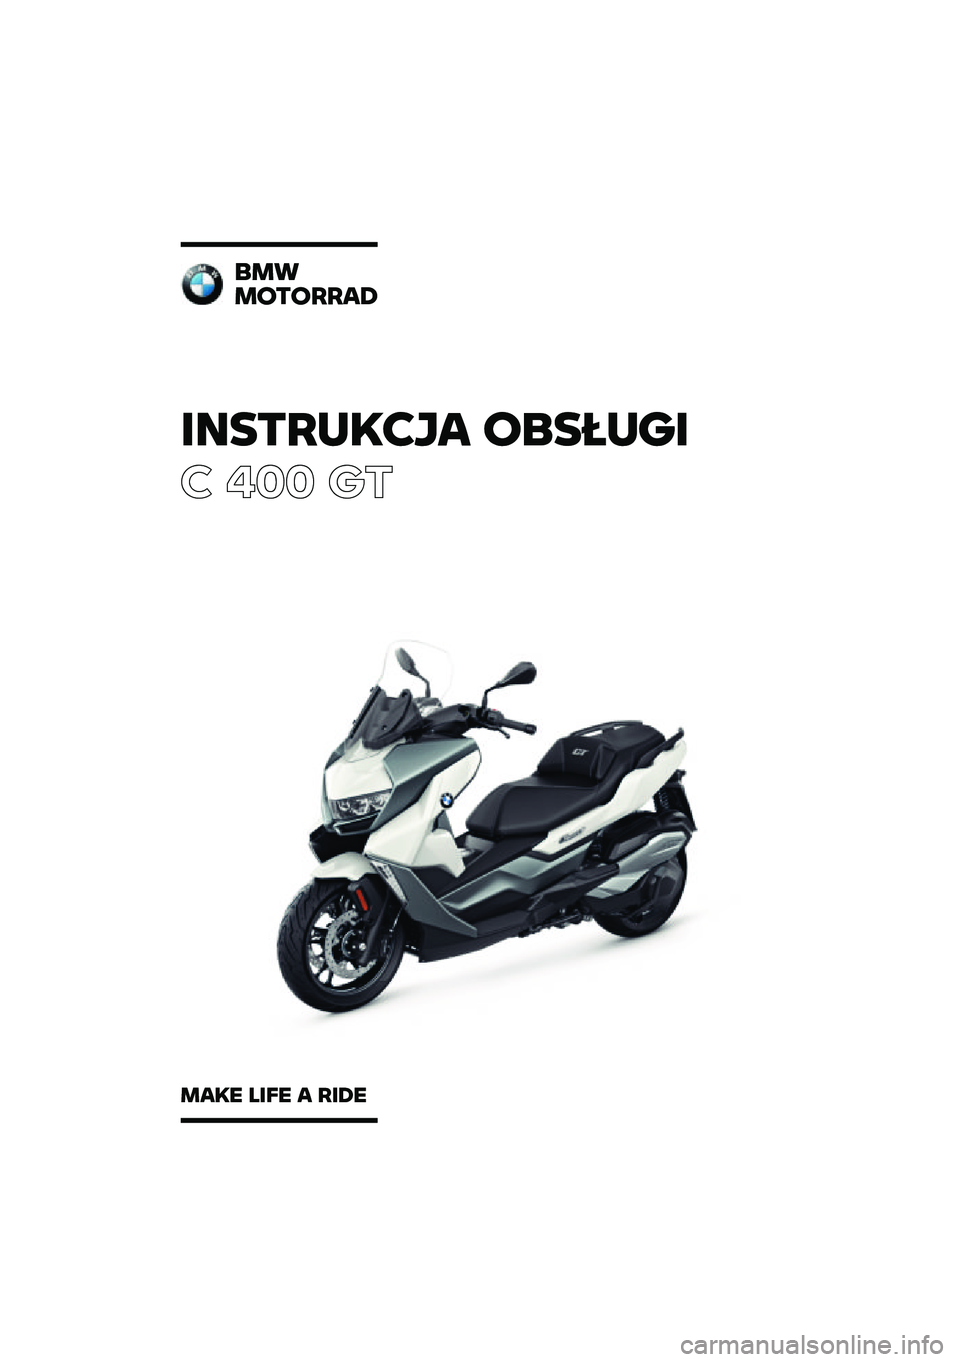 BMW MOTORRAD C 400 GT 2020  Instrukcja obsługi (in Polish) �������\b�	�
� �\f�
�����
� ��� ��\b
�
��
��\f��\f����
���\b� ���� � ���� 